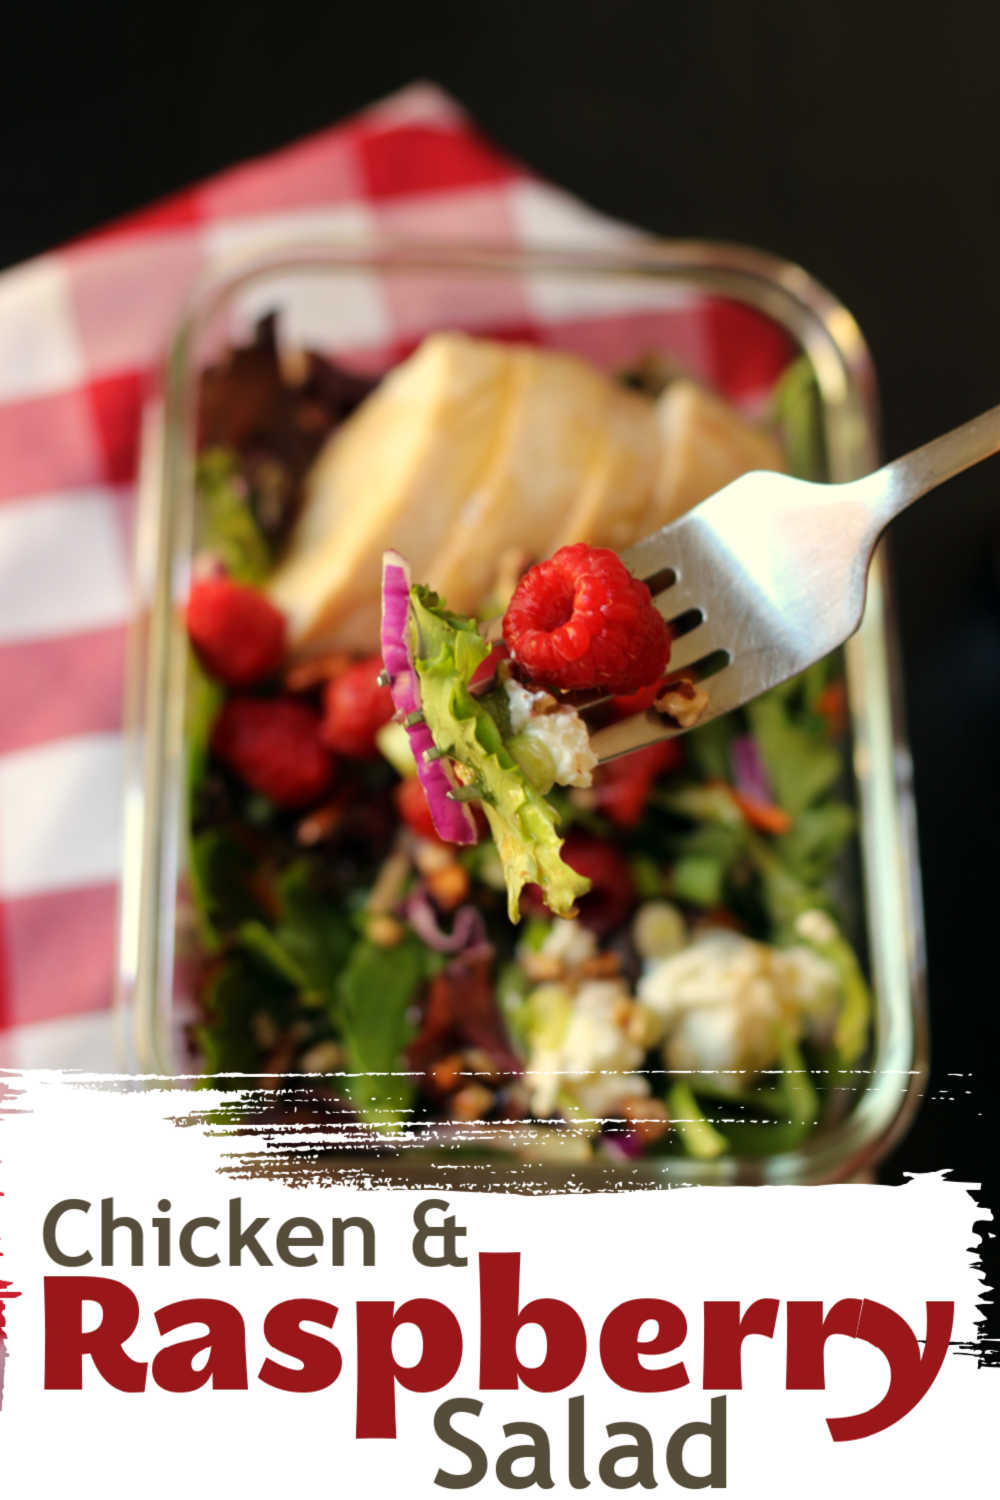 A close up of Chicken Raspberry Salad